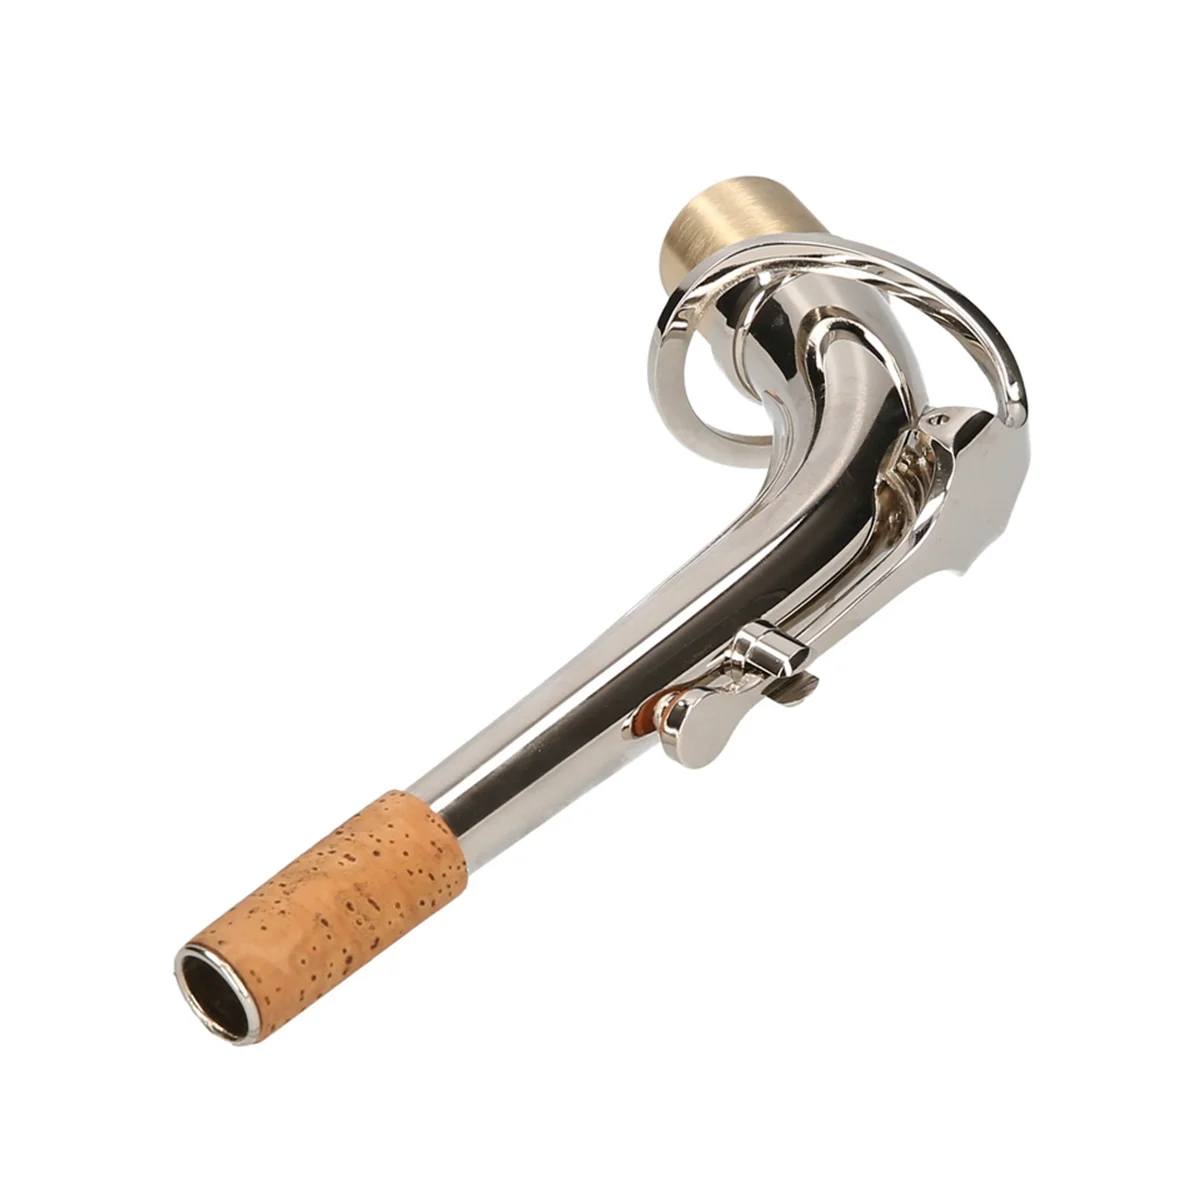 Novi Alto Saksofon Bend Vratu Medenina Material Sax Pihalni Instrument, Opremo 2,5 cm,Srebro